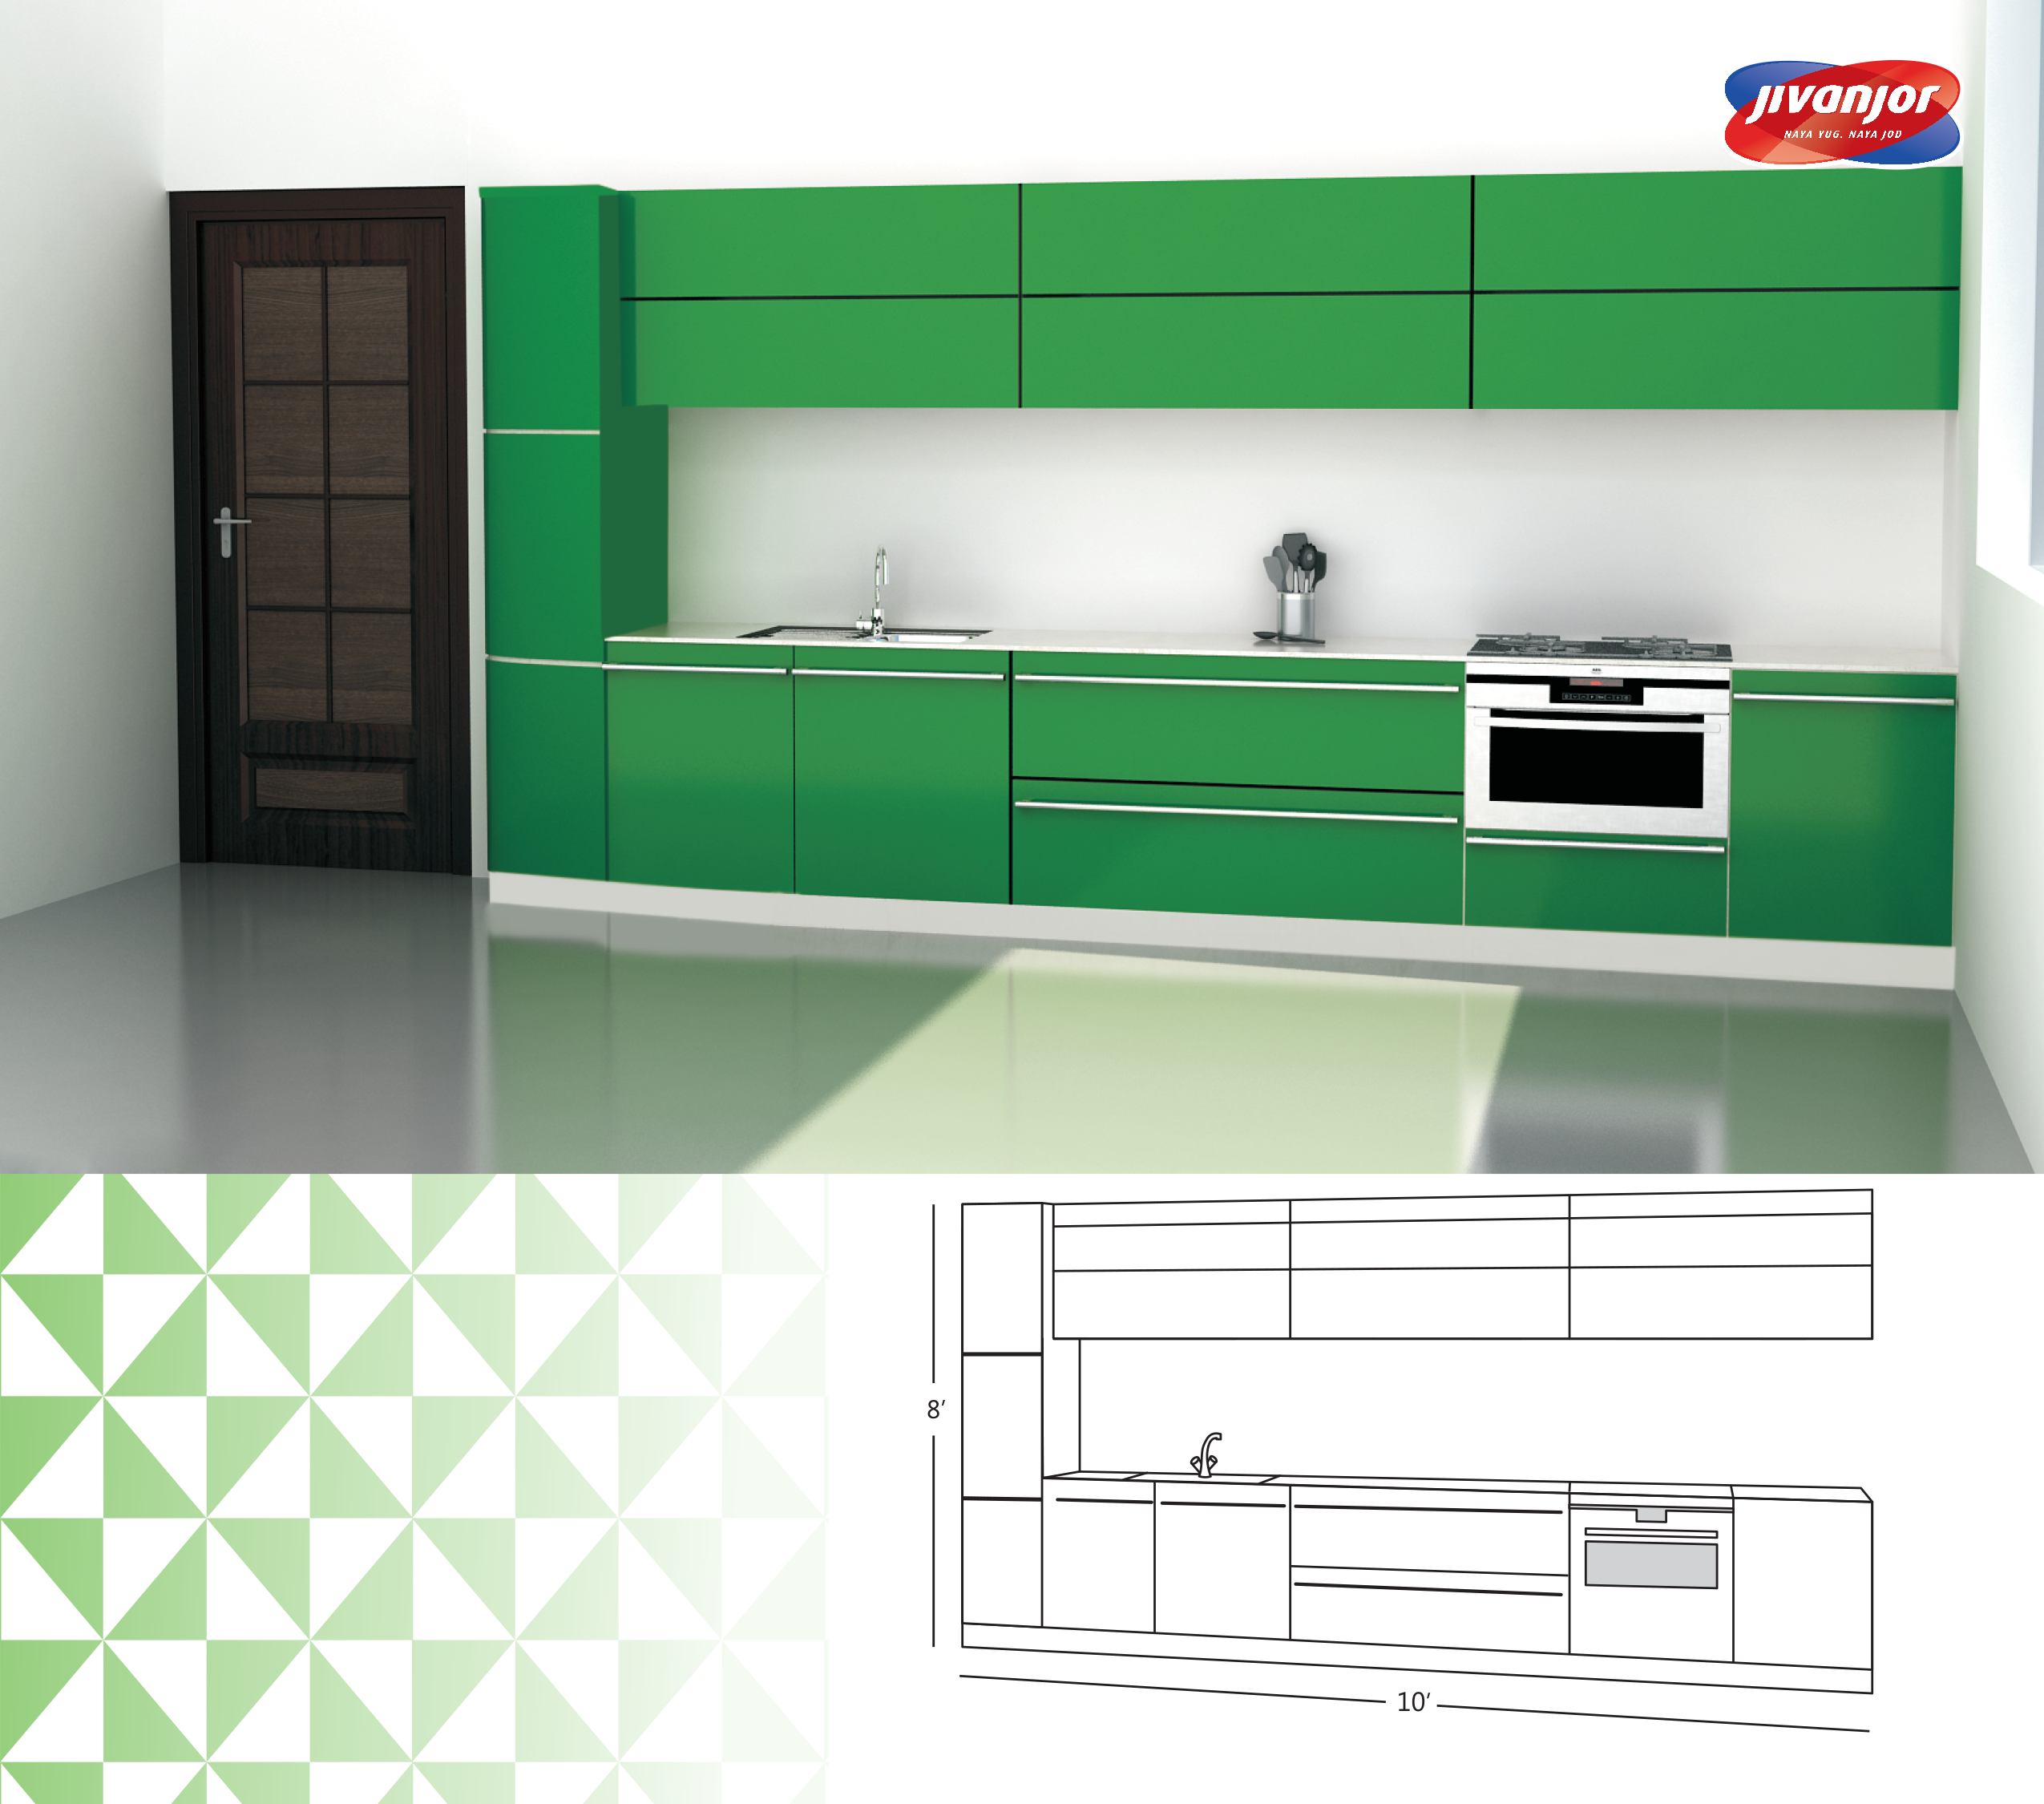 Single Line Kitchen Design with an Inbuilt Oven